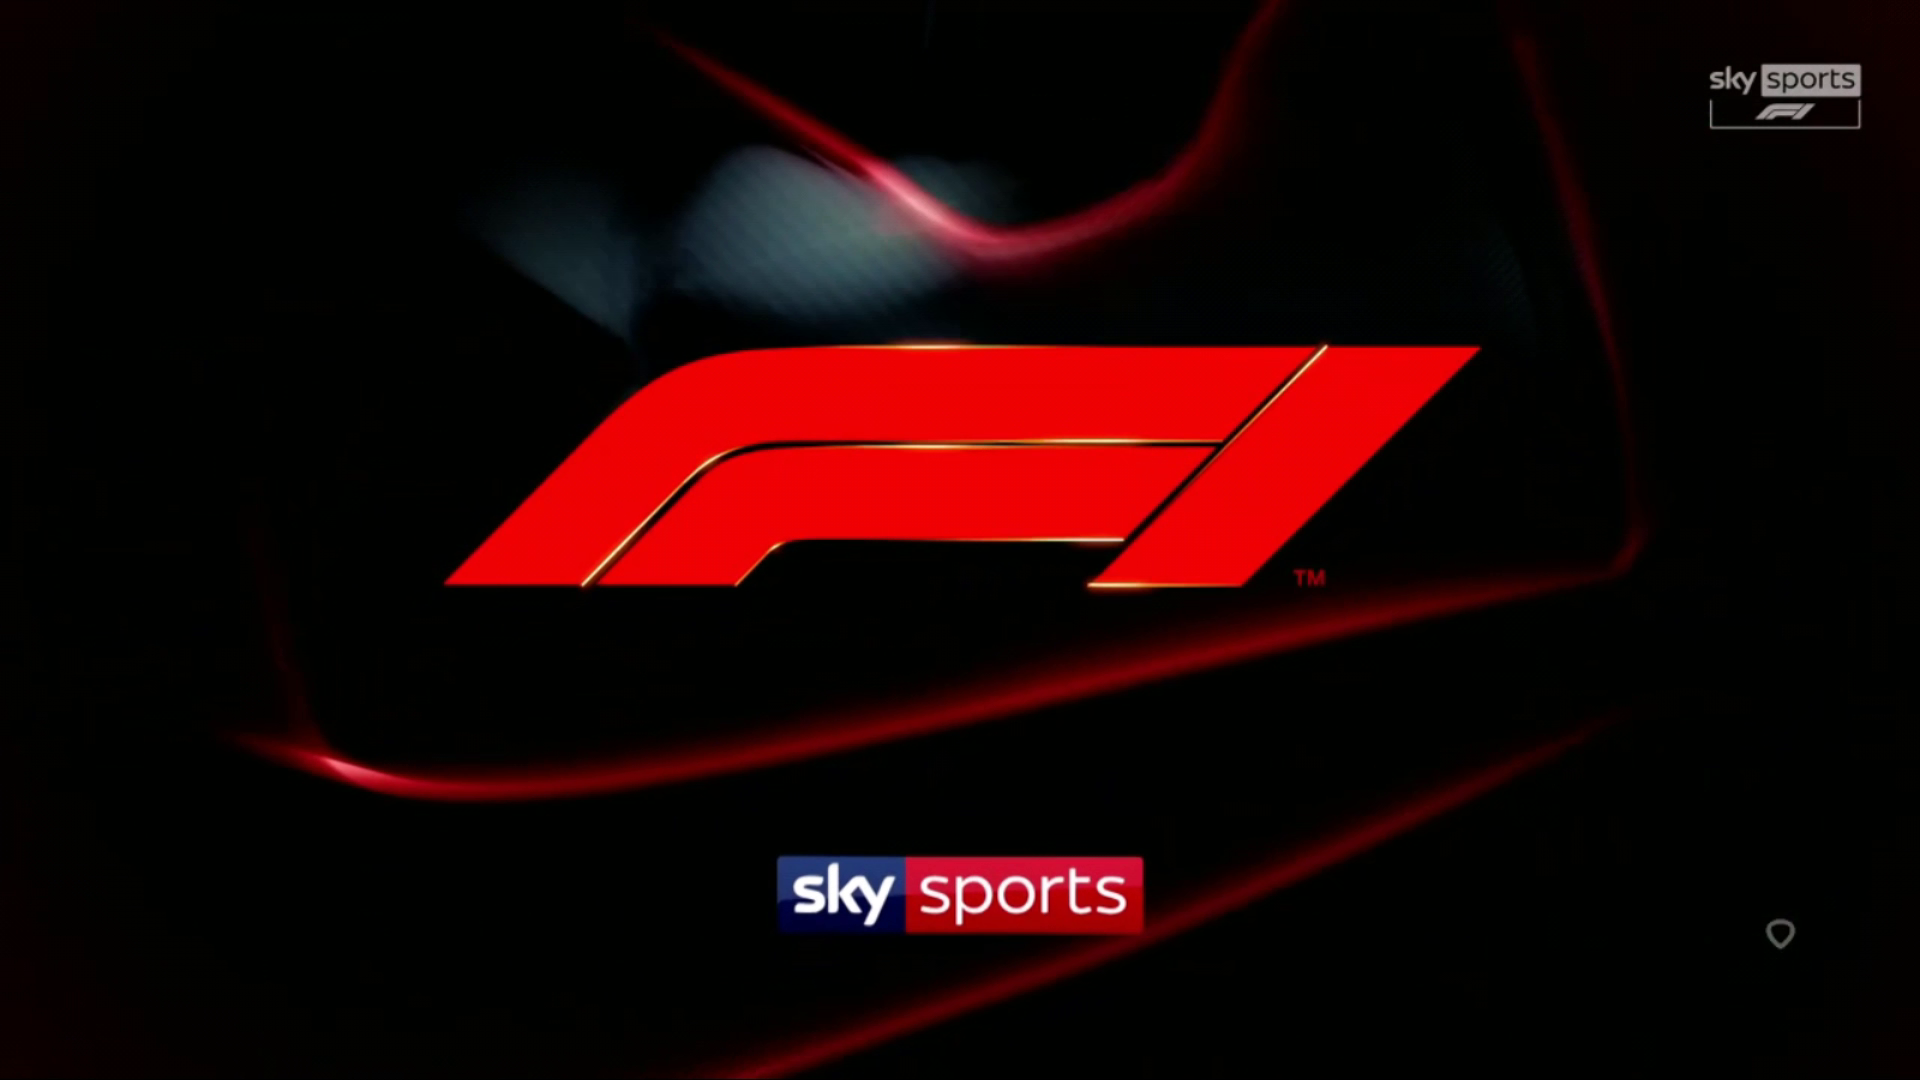 Sky Sports Formule 1 - 2021 Race 21 - Saoedi-Arabië - Kwalificatie - 1080p